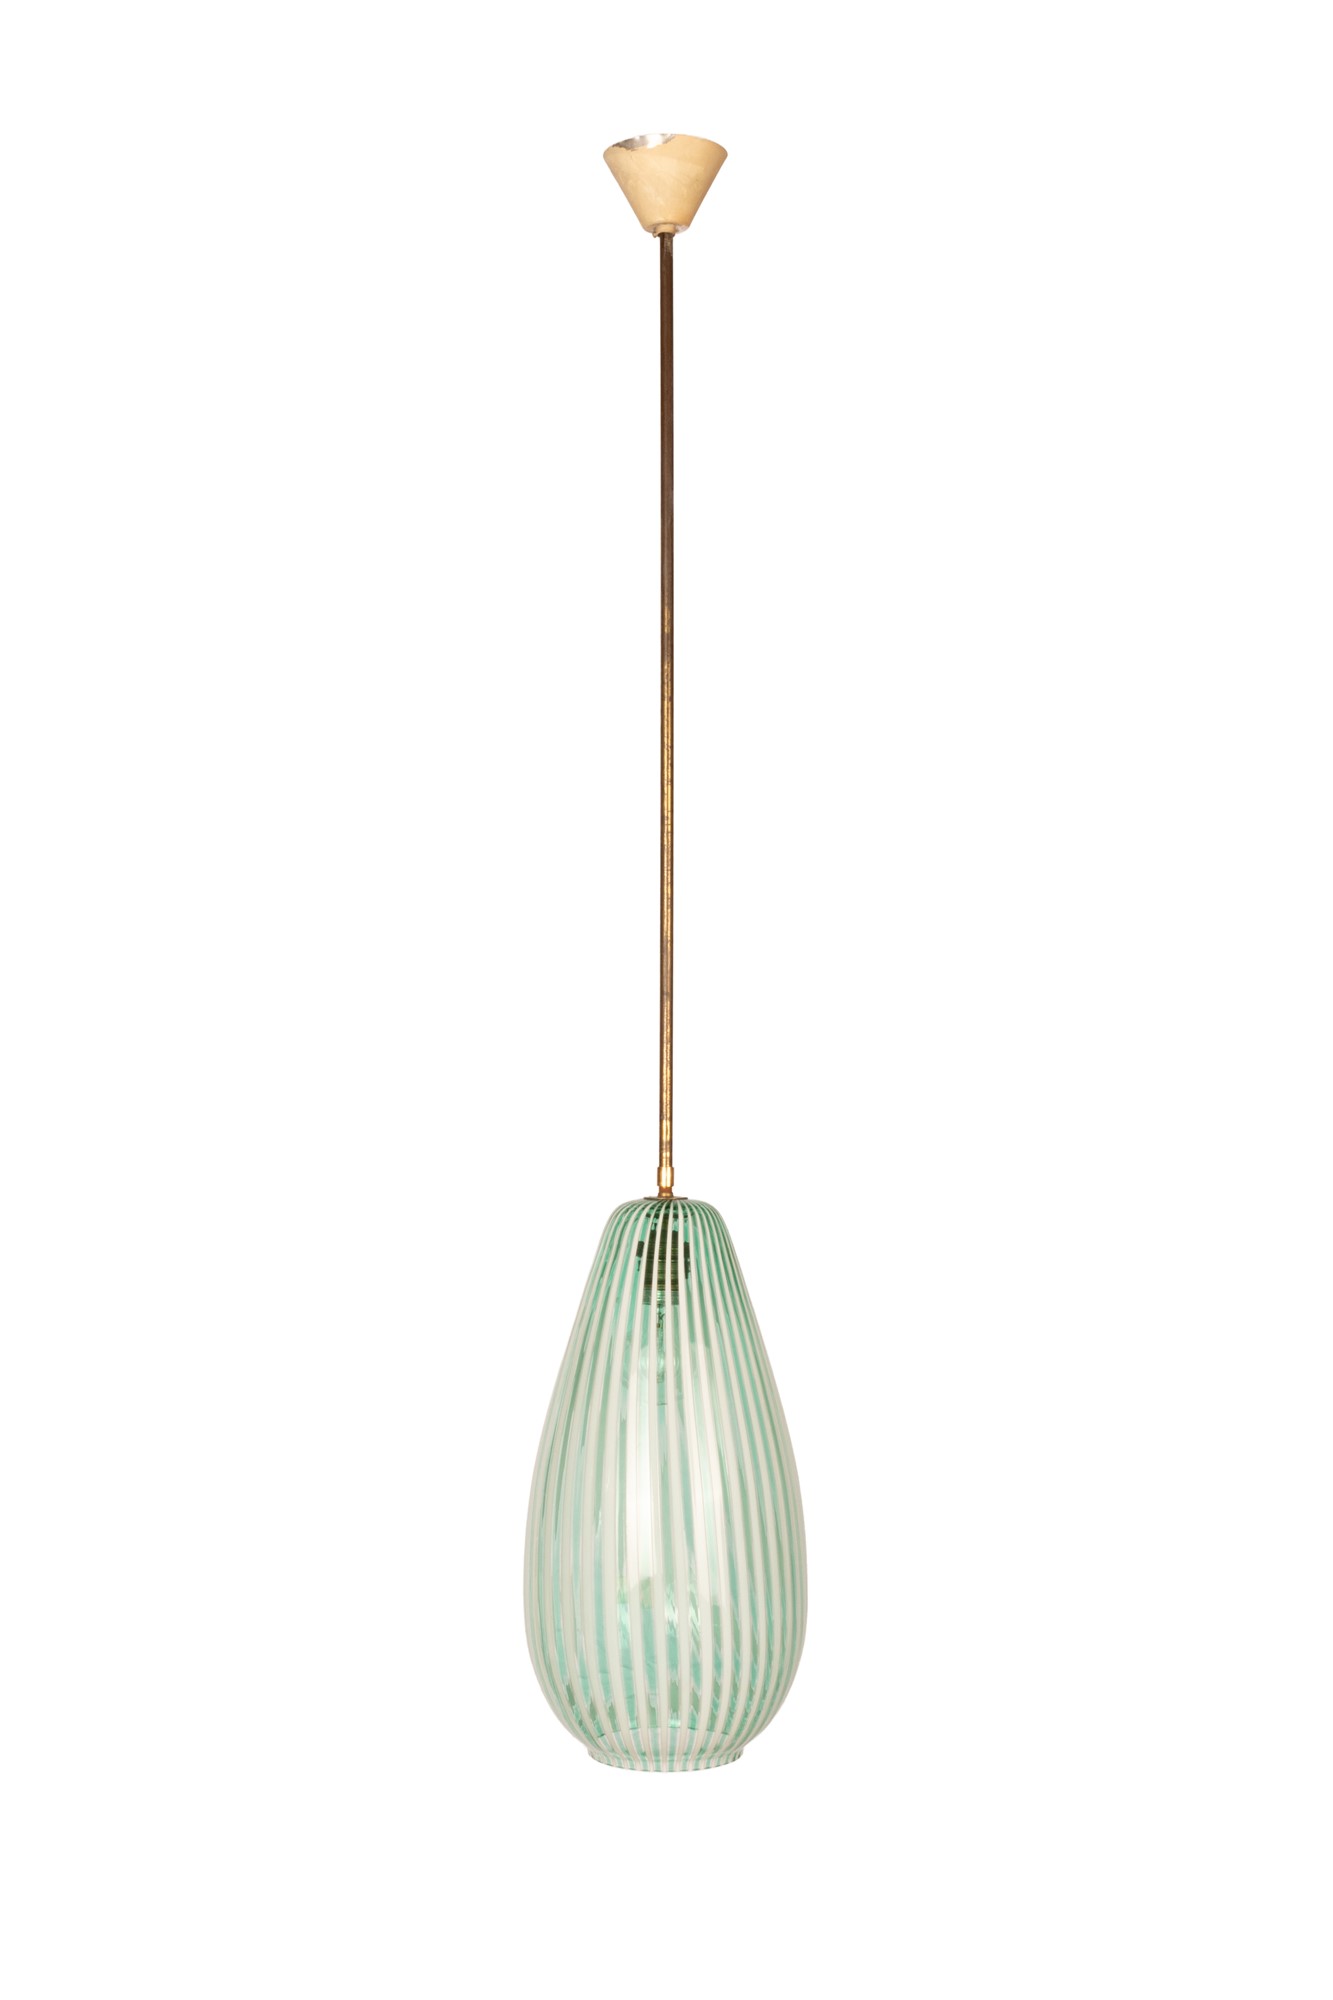 Hanging lamp in zanrifico glass - Image 3 of 16